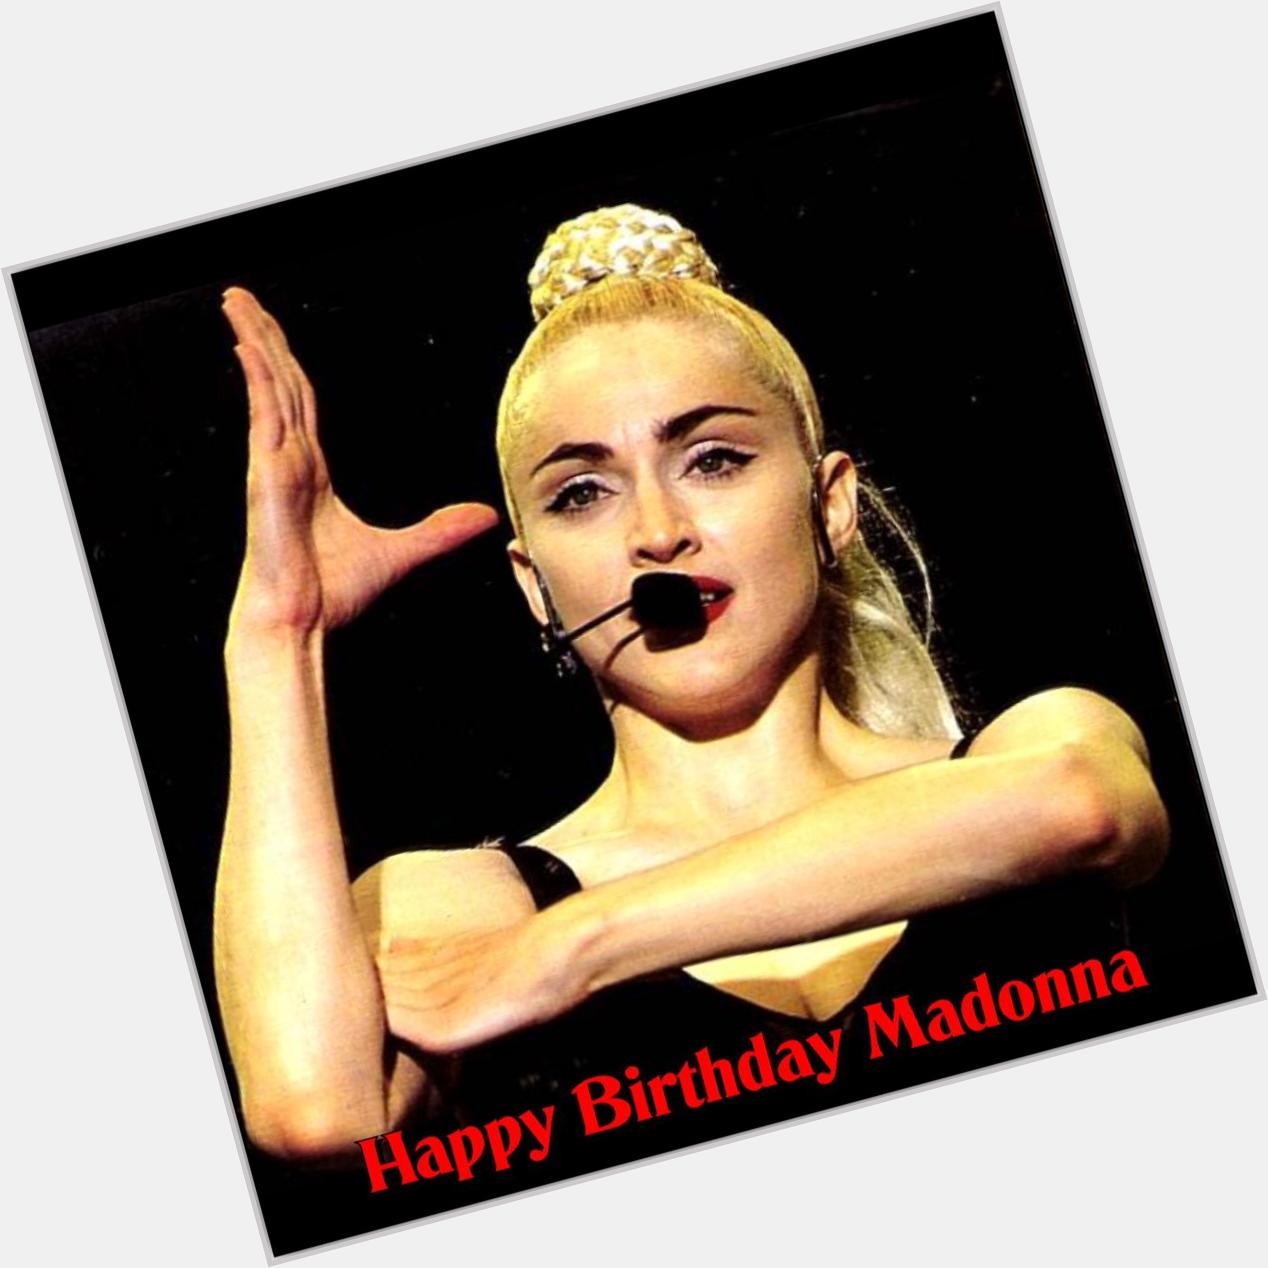 Happy birthday madonna      